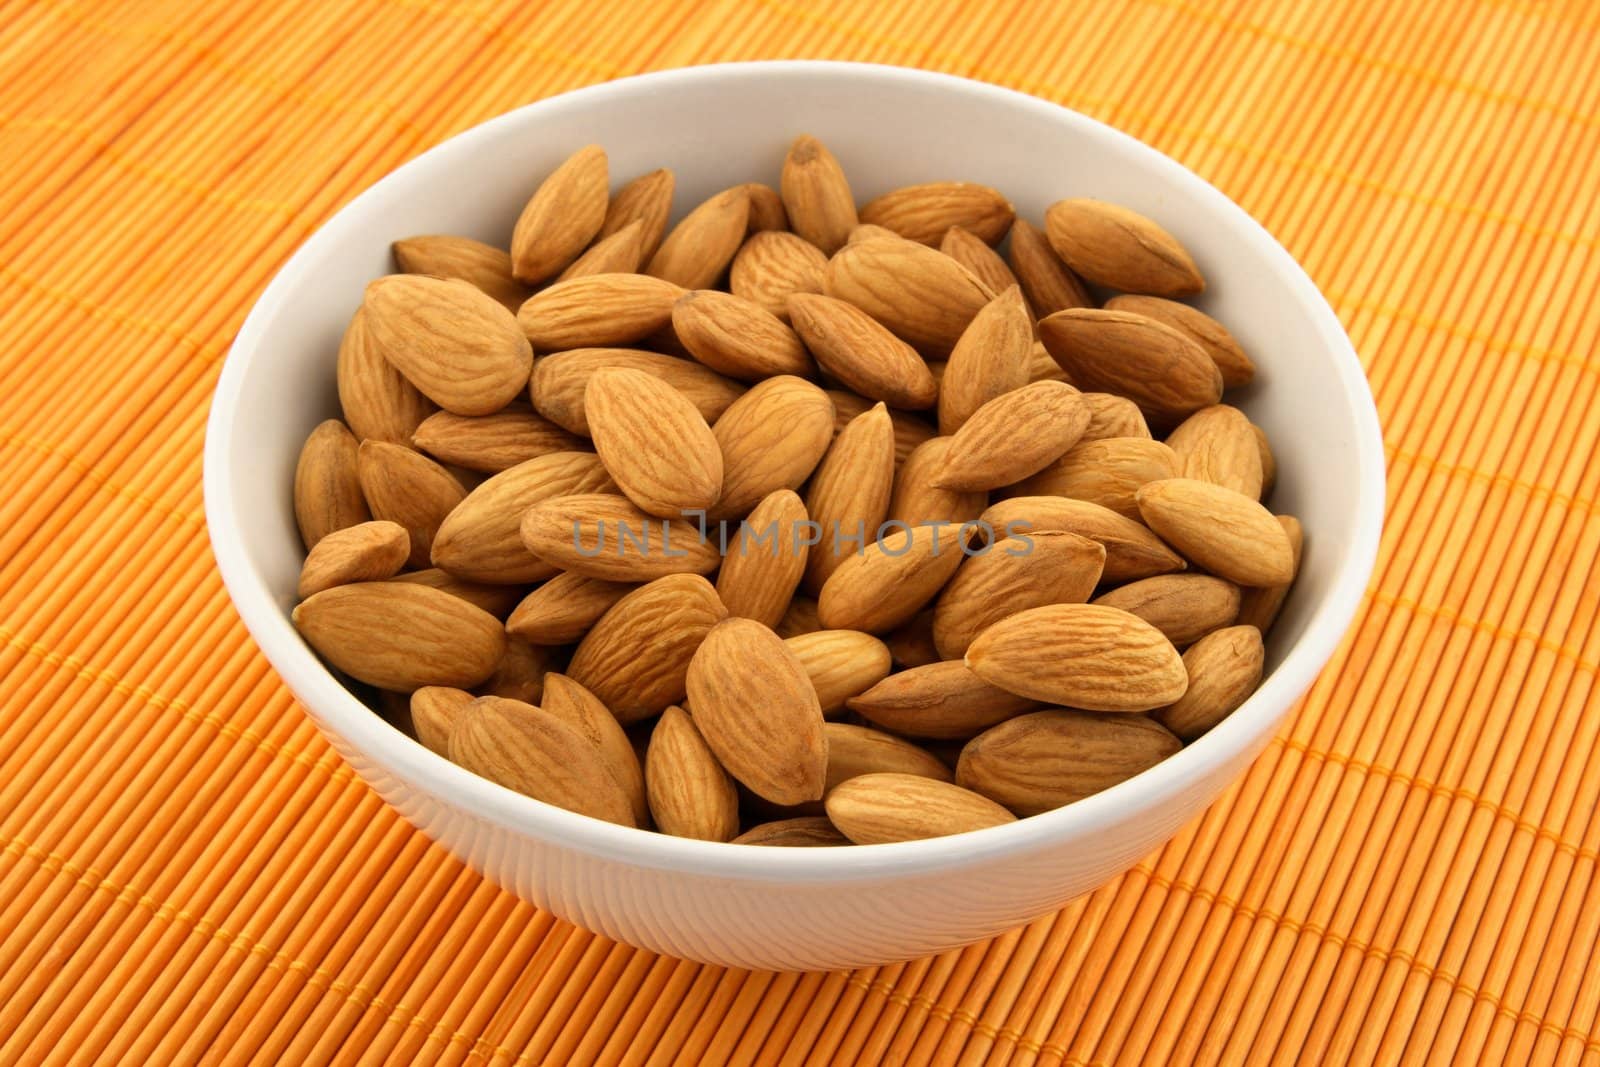 Fresh almonds in a bowl on orange rattan mat.